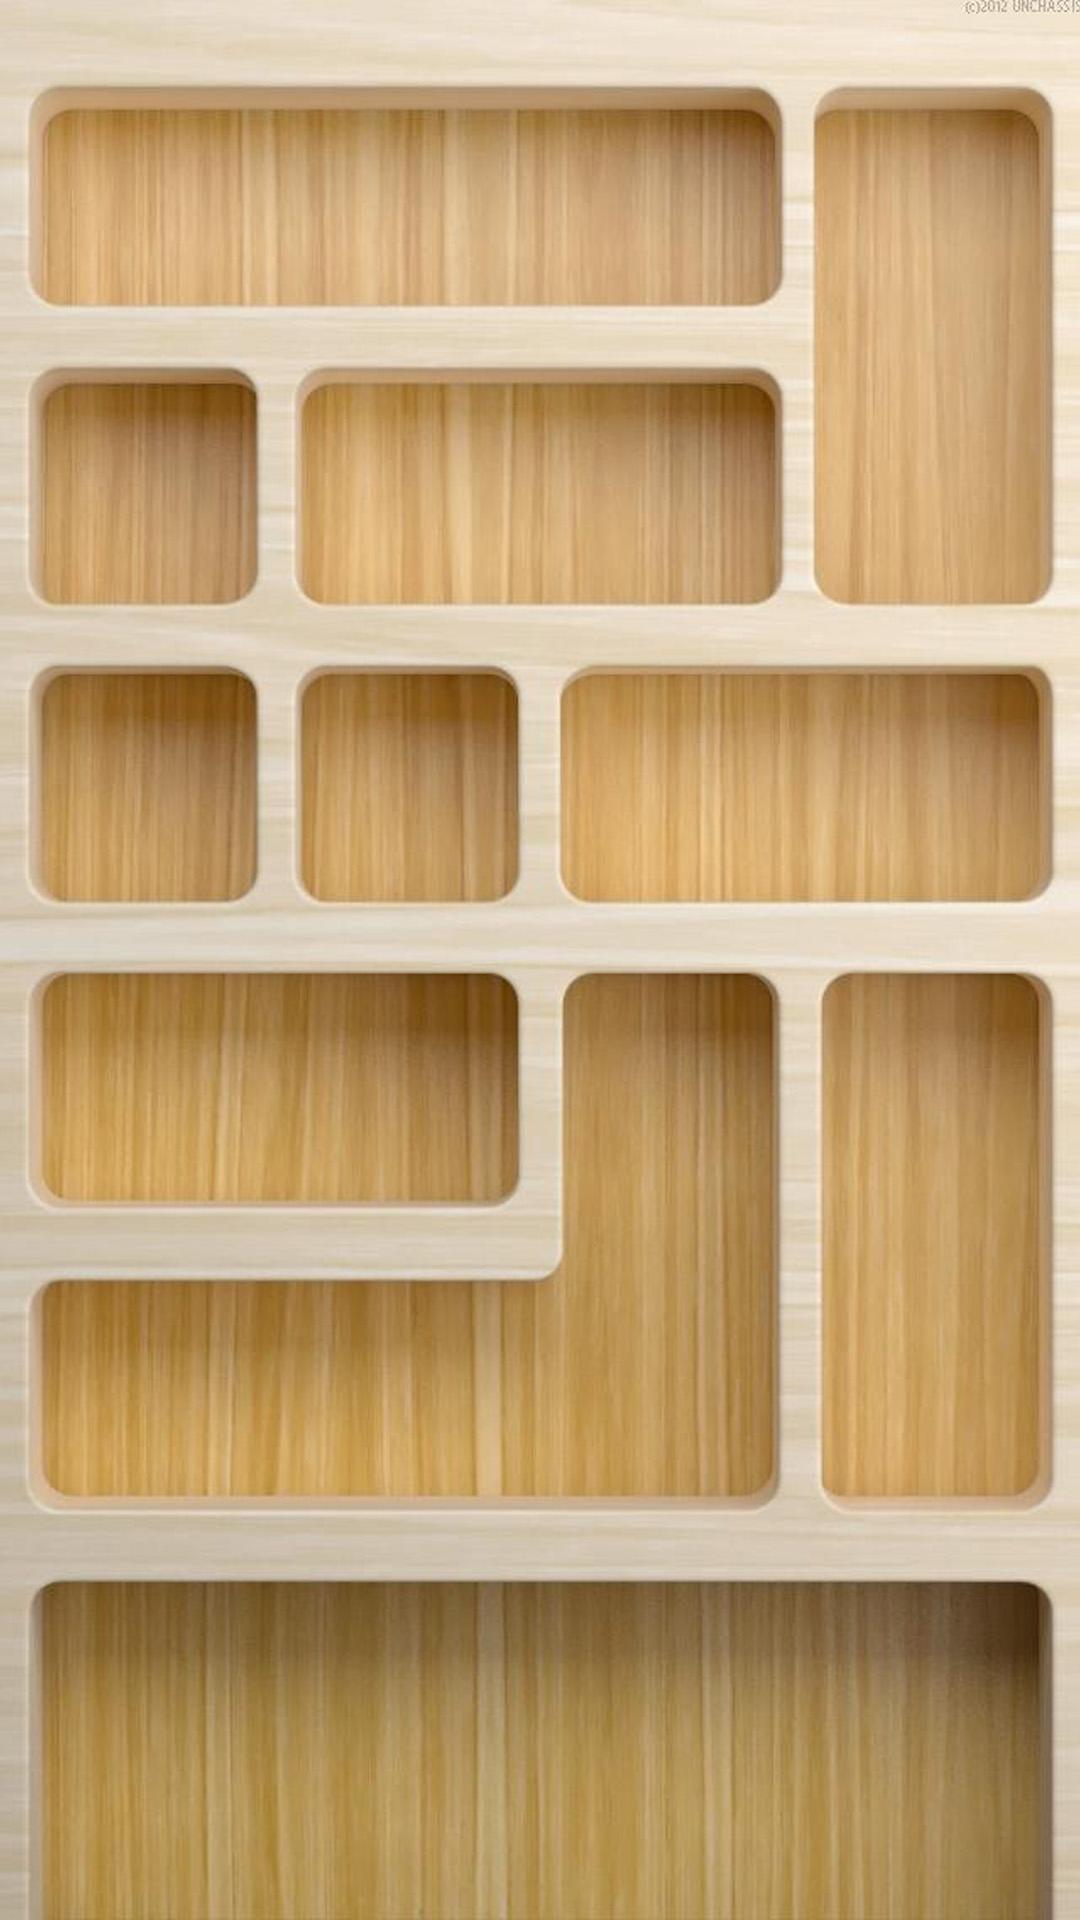 Iphone Shelf Wallpapers